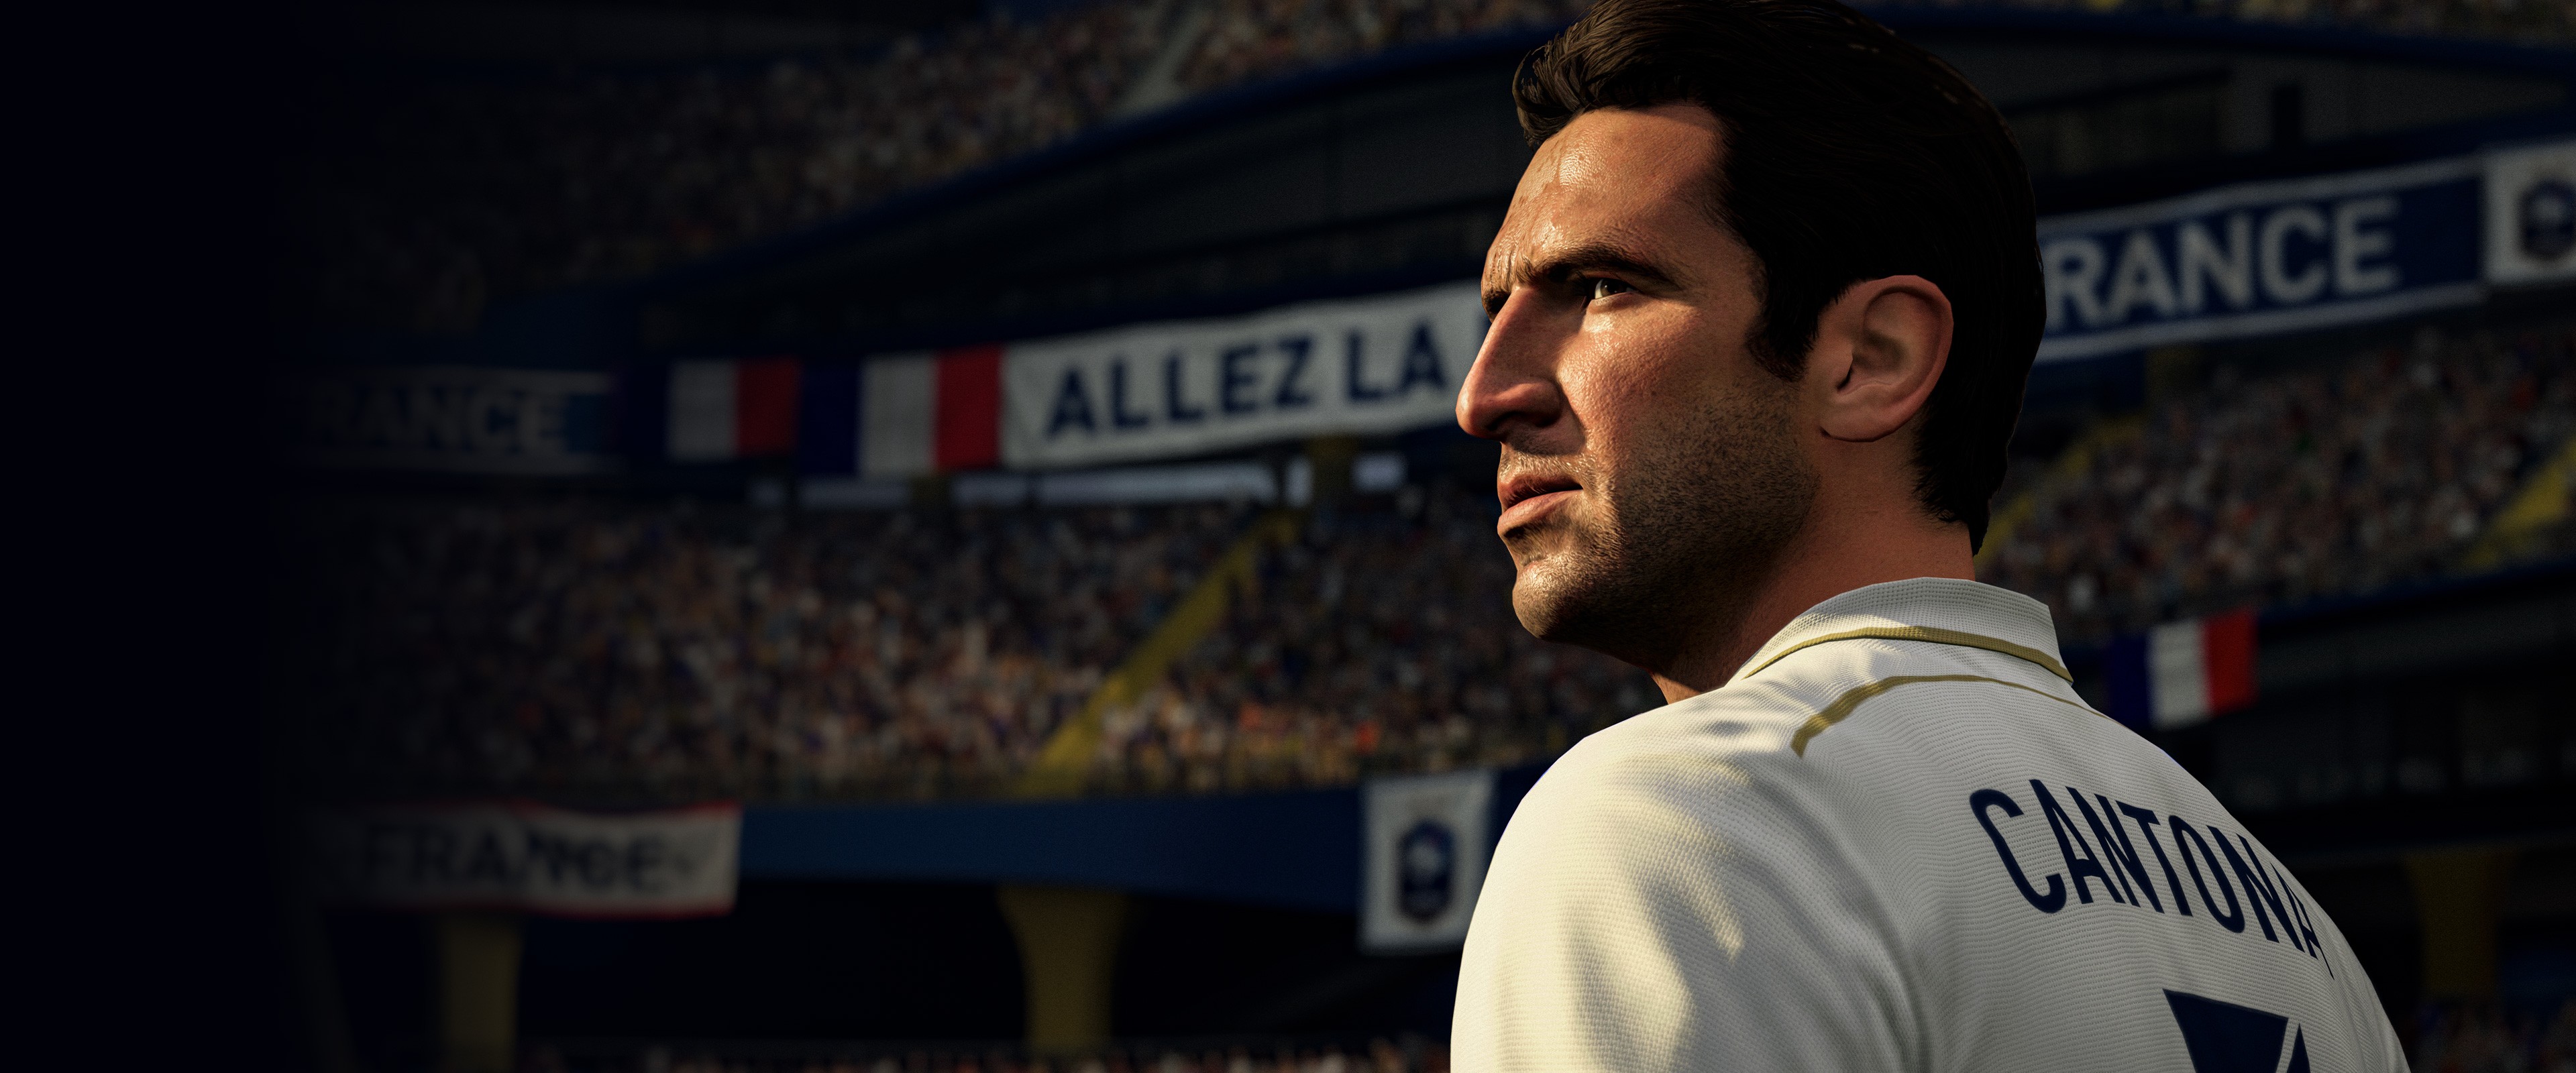 FIFA 21 &mdash; PC | Origin